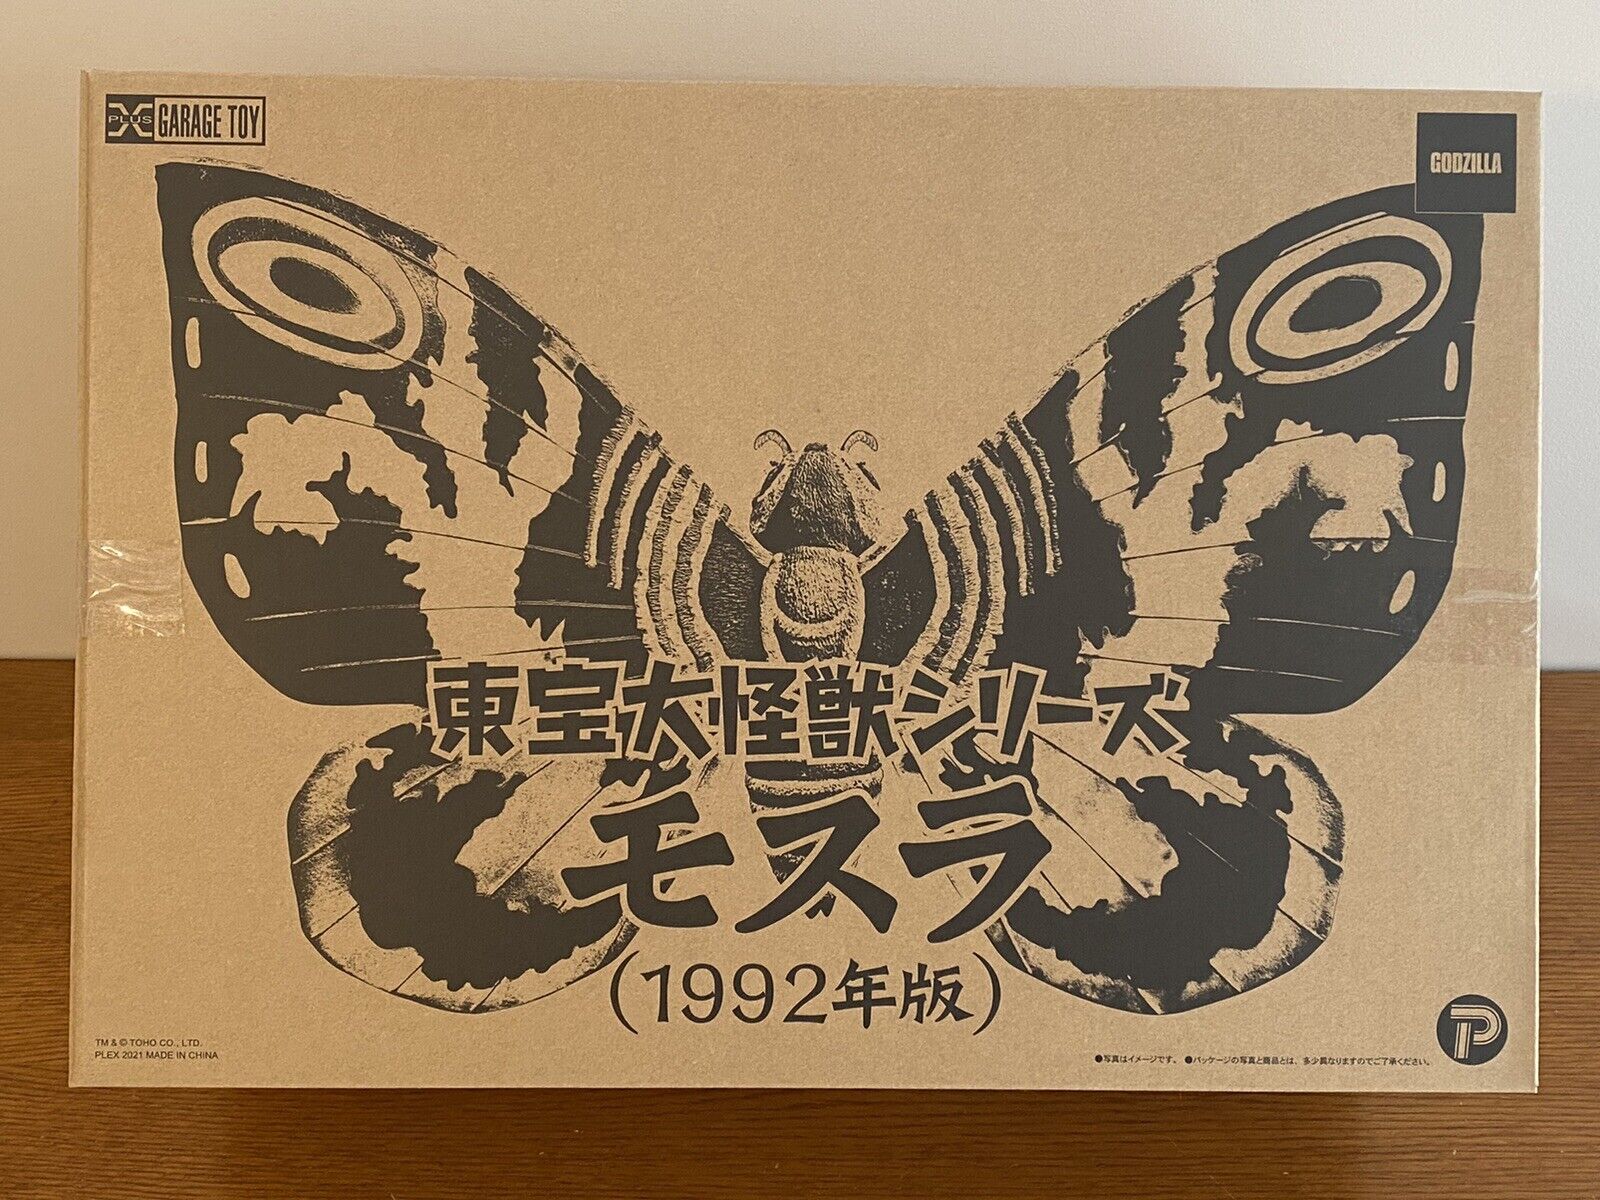 X-Plus Garage Purchase Toy Mothra New” favorite 1992 “Brand